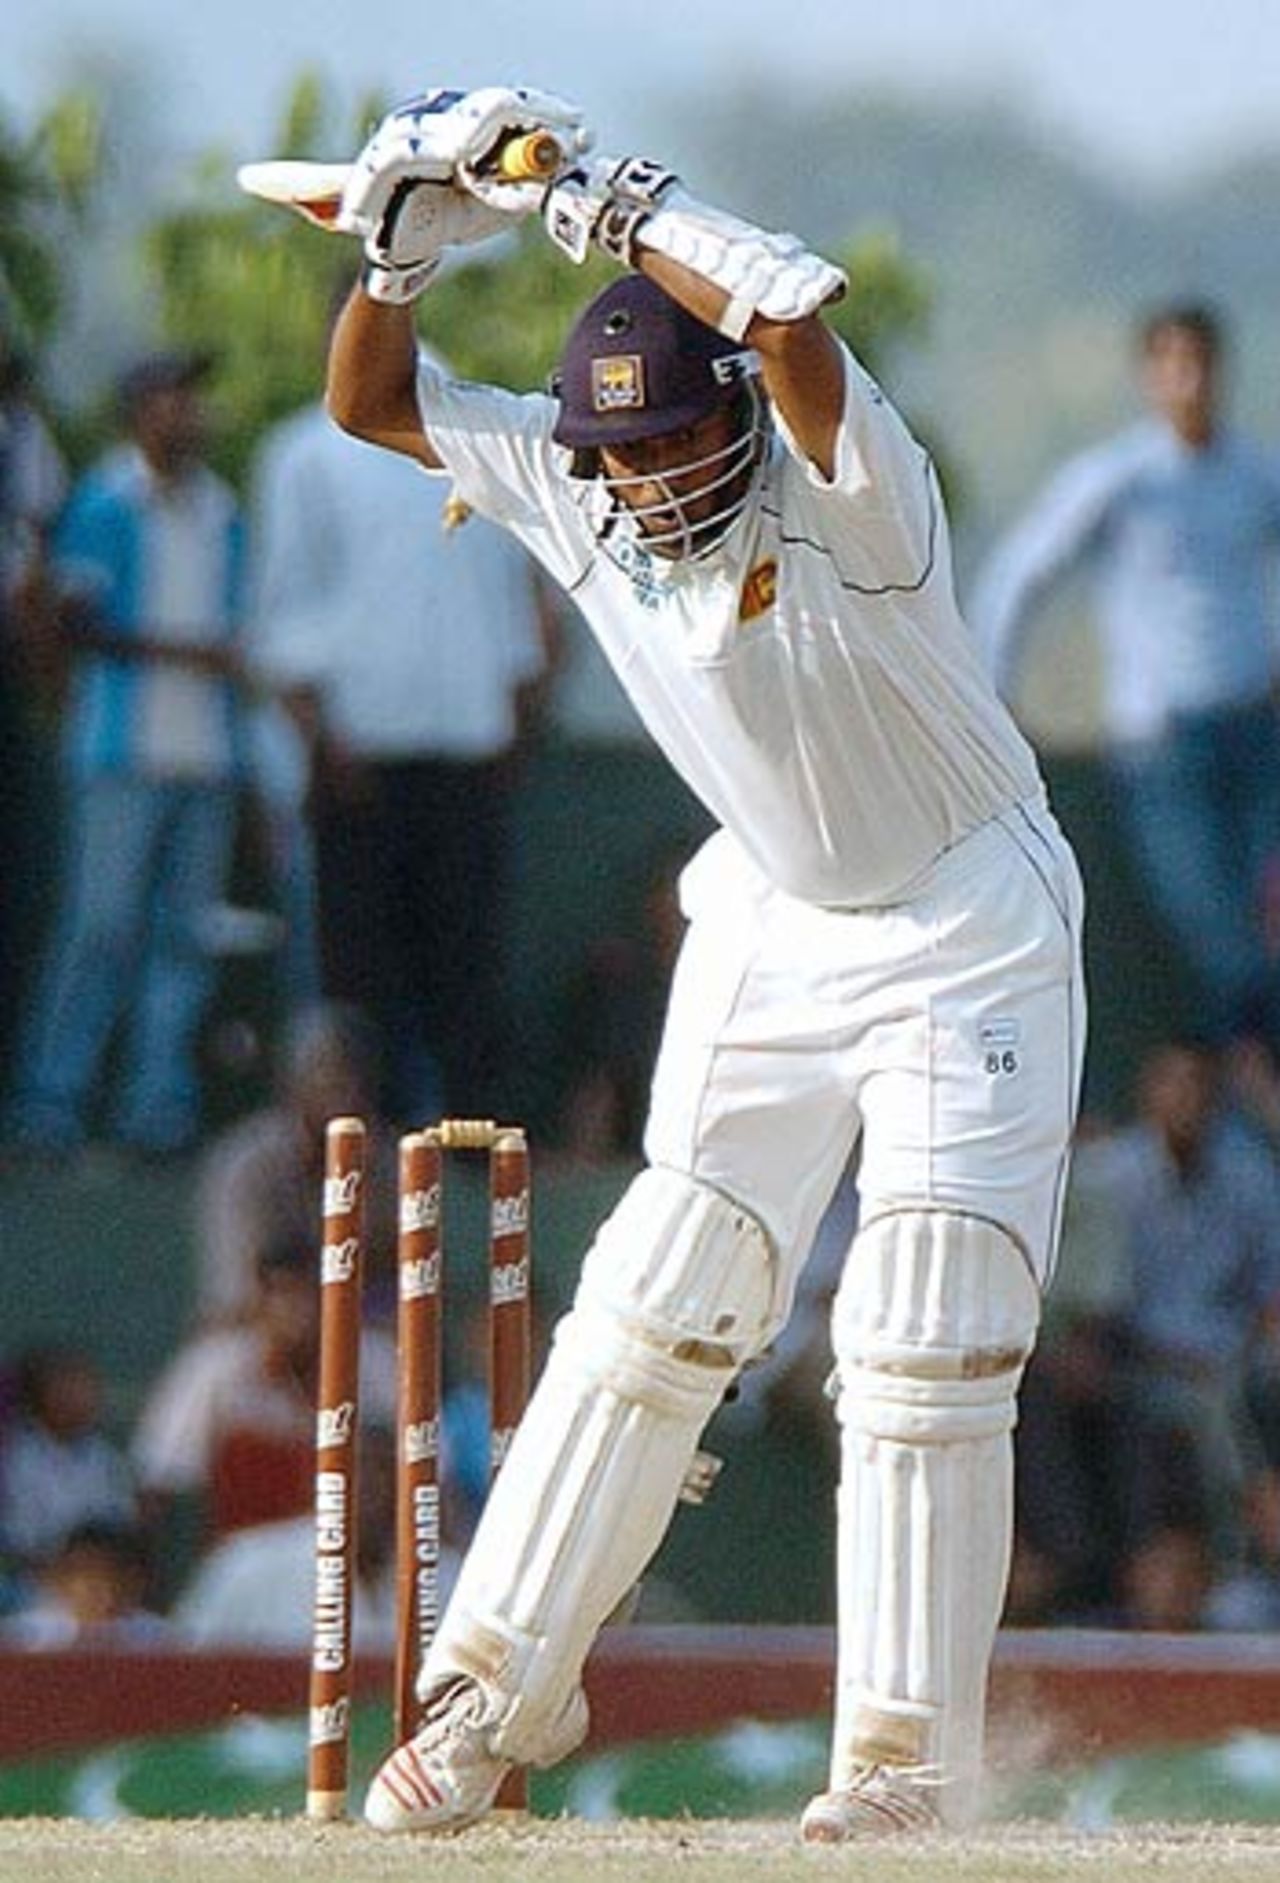 Thilan Samaraweera shoulders arms to Mohammad Asif, Sri Lanka v Pakistan, 2nd Test, Kandy, 2nd day, April 4 2006